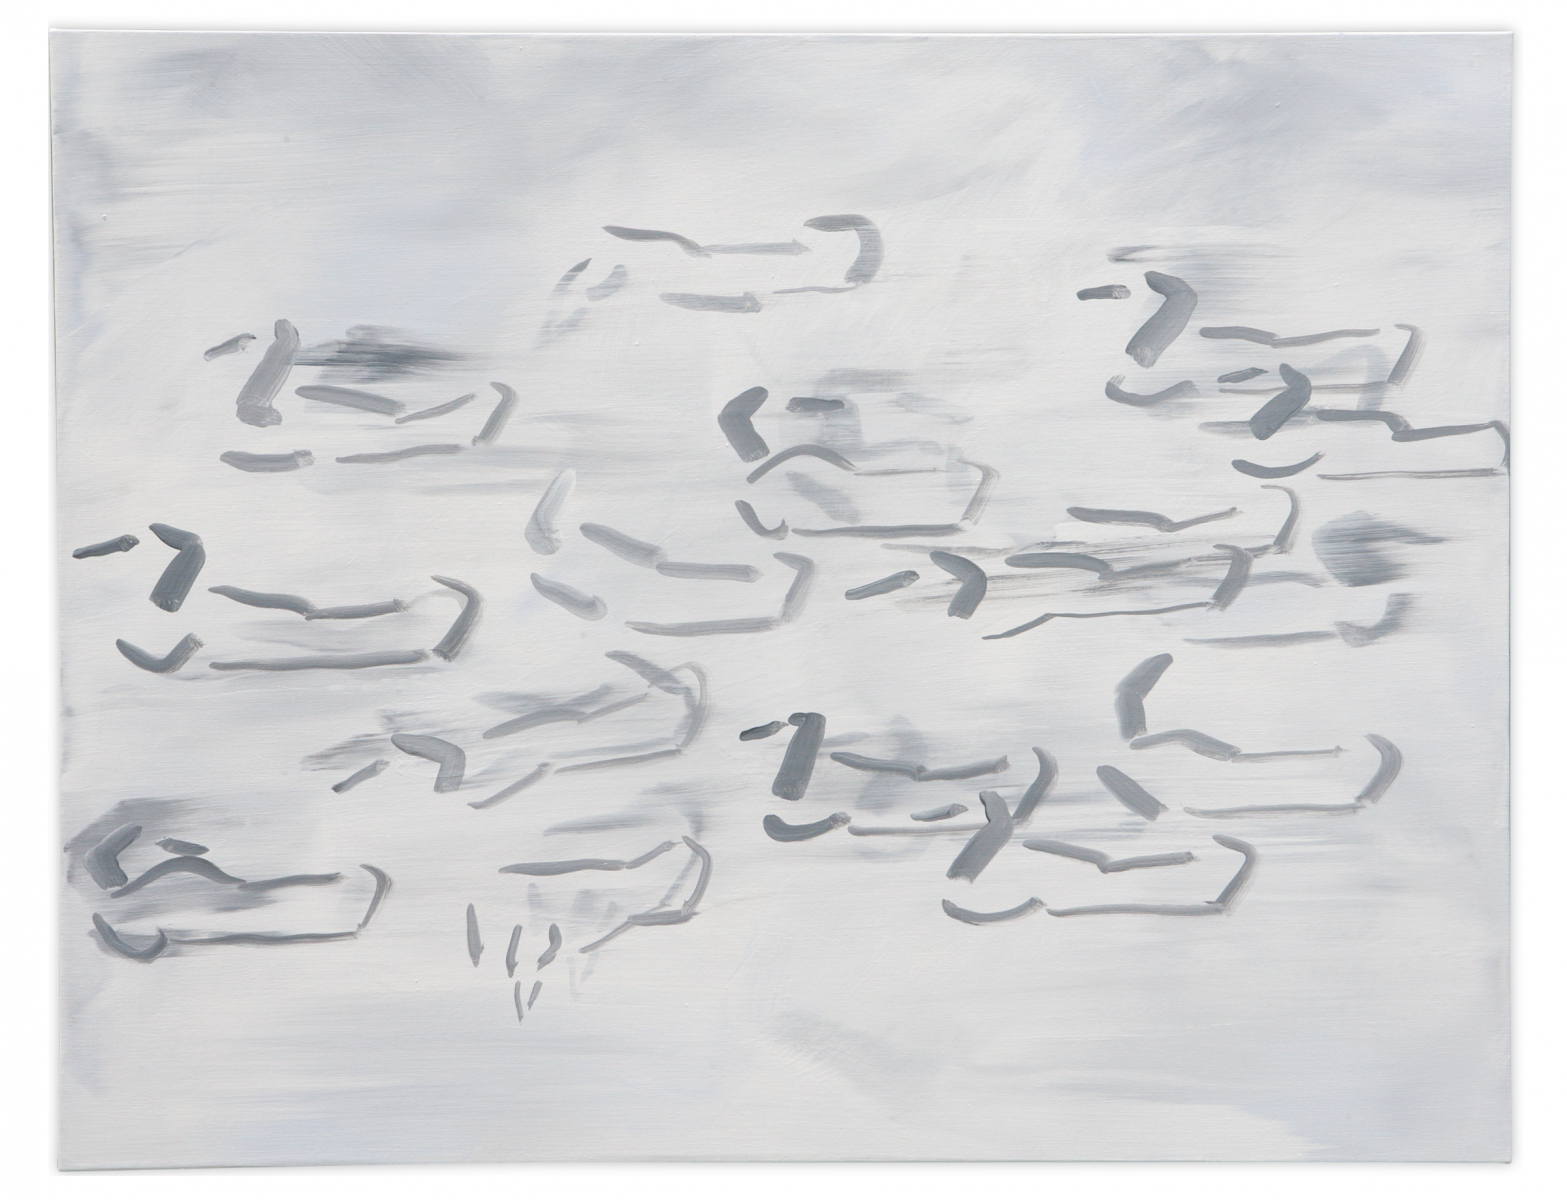 Emptiness-13002, 2013, Acrylic on Canvas, 91x116.7cm